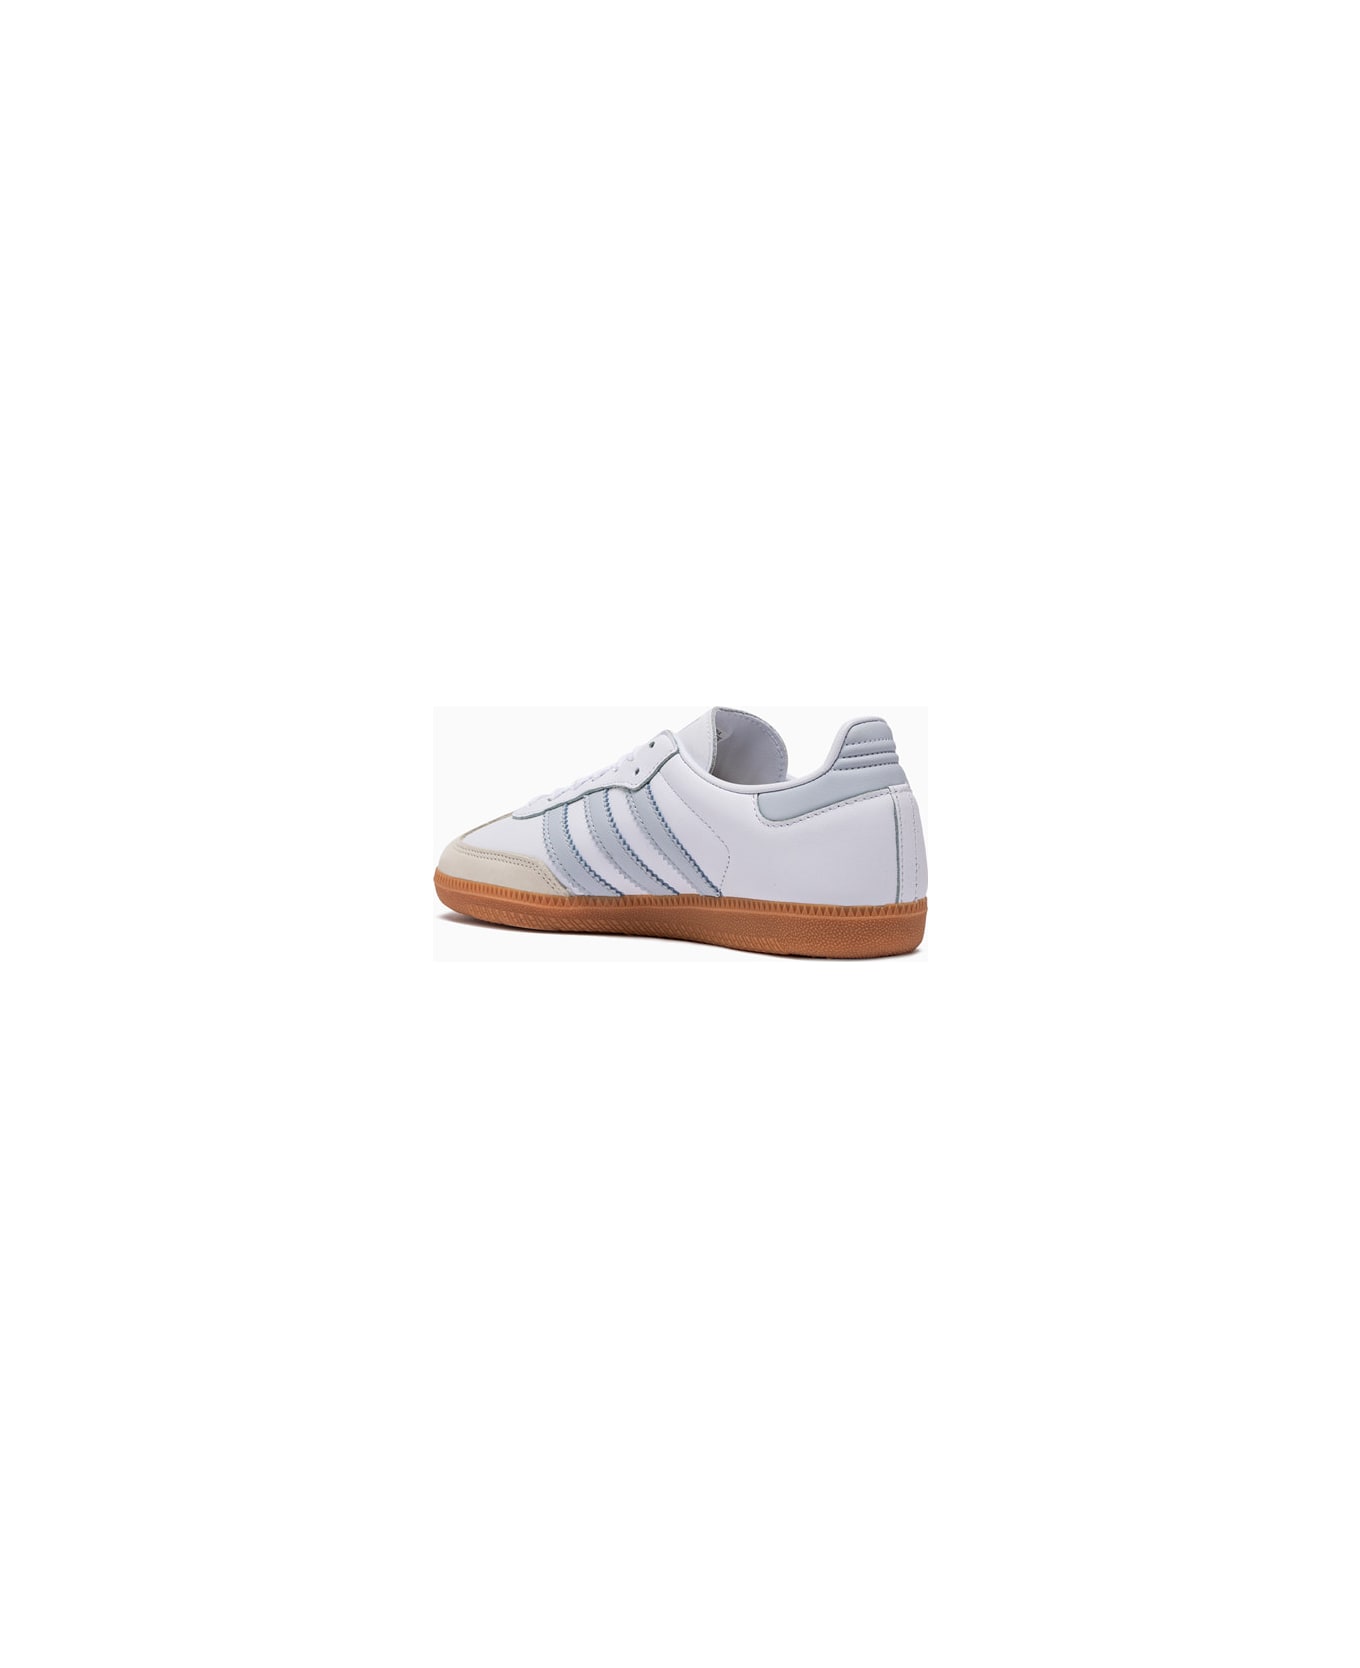 Adidas Samba Og W Sneakers Ie0877 - White